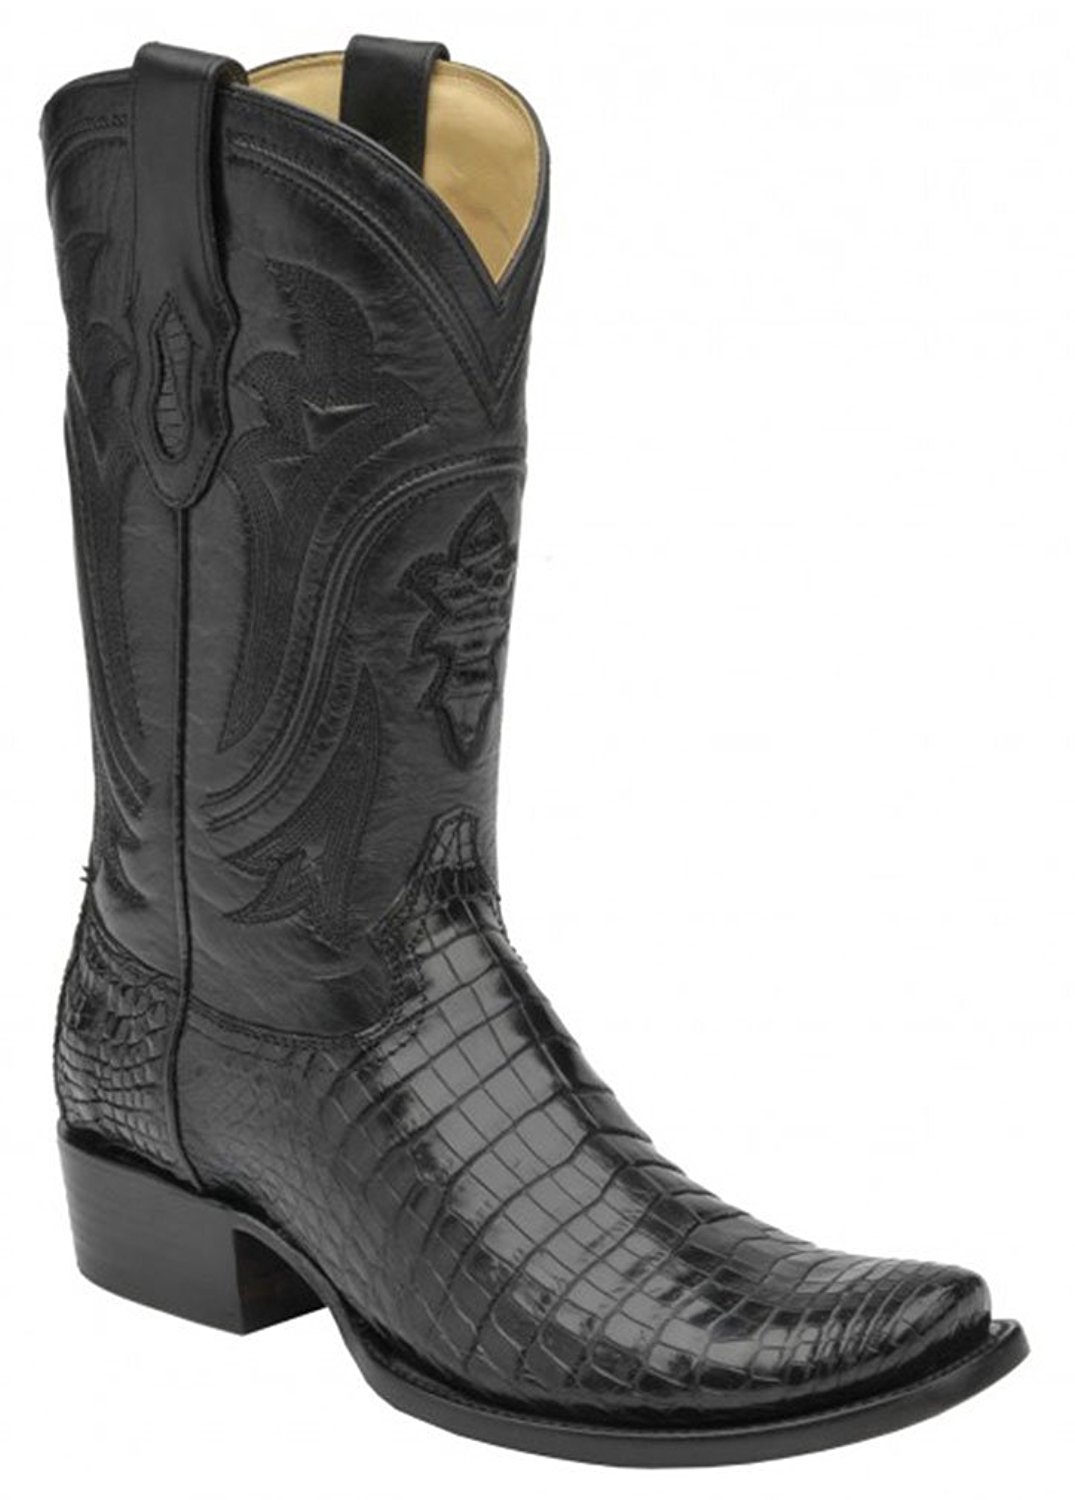 CORRAL Men's Black Nile Belly Square Toe Cowboy Boots C1094 (8 D(M) US) - image 1 of 1